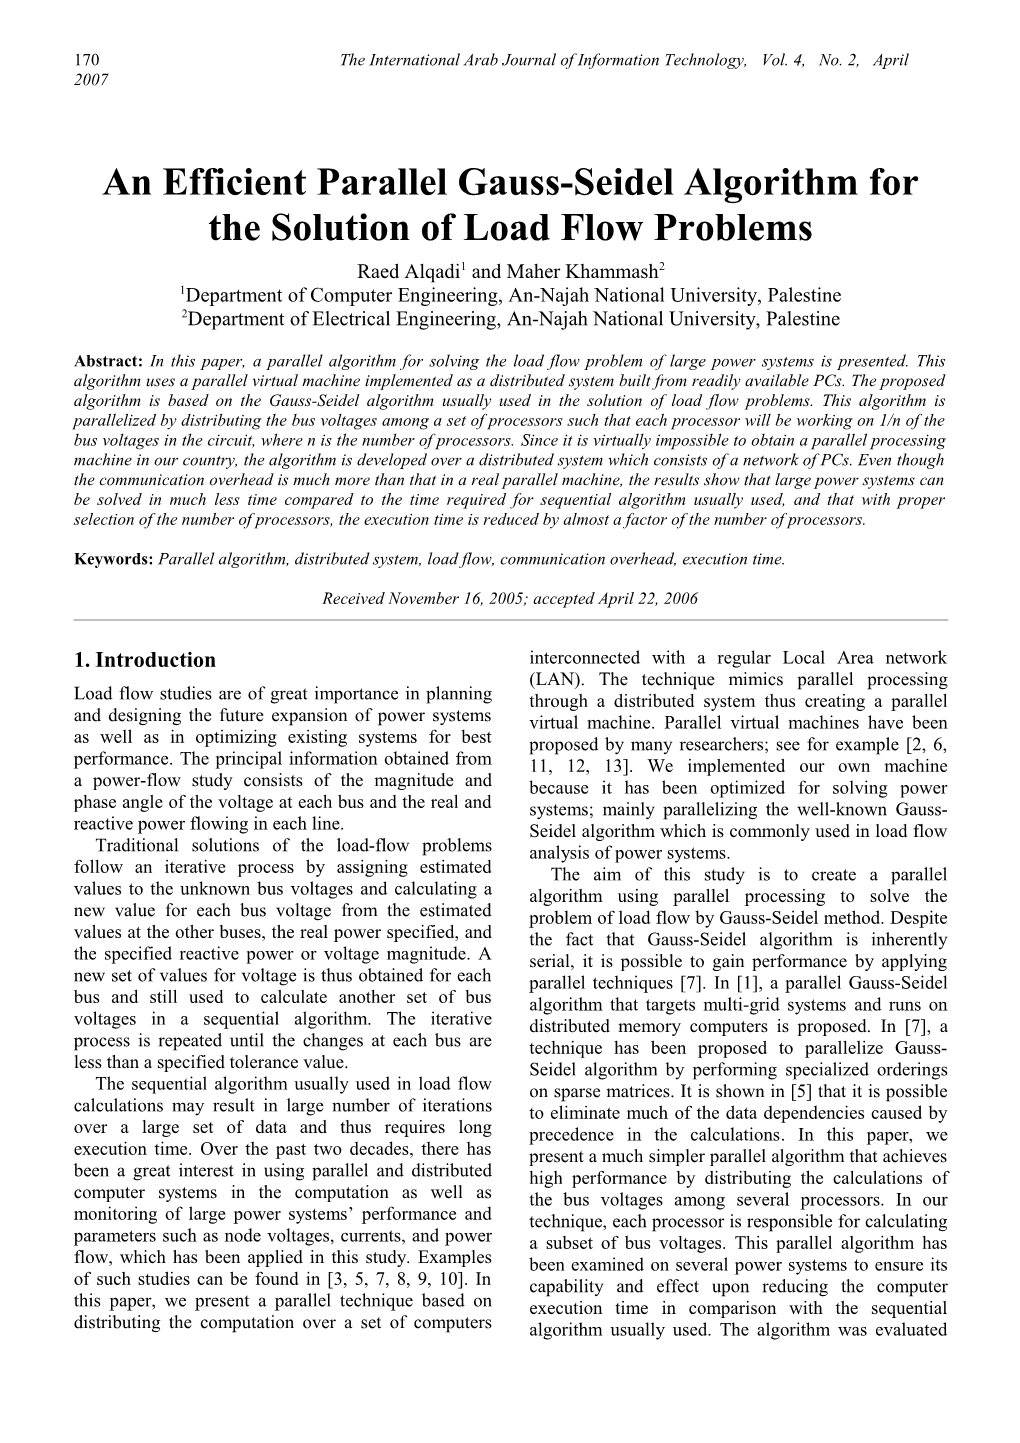 An Efficient Parallel Gauss-Seidel Algorithm for the Solution of Load Flow Problems